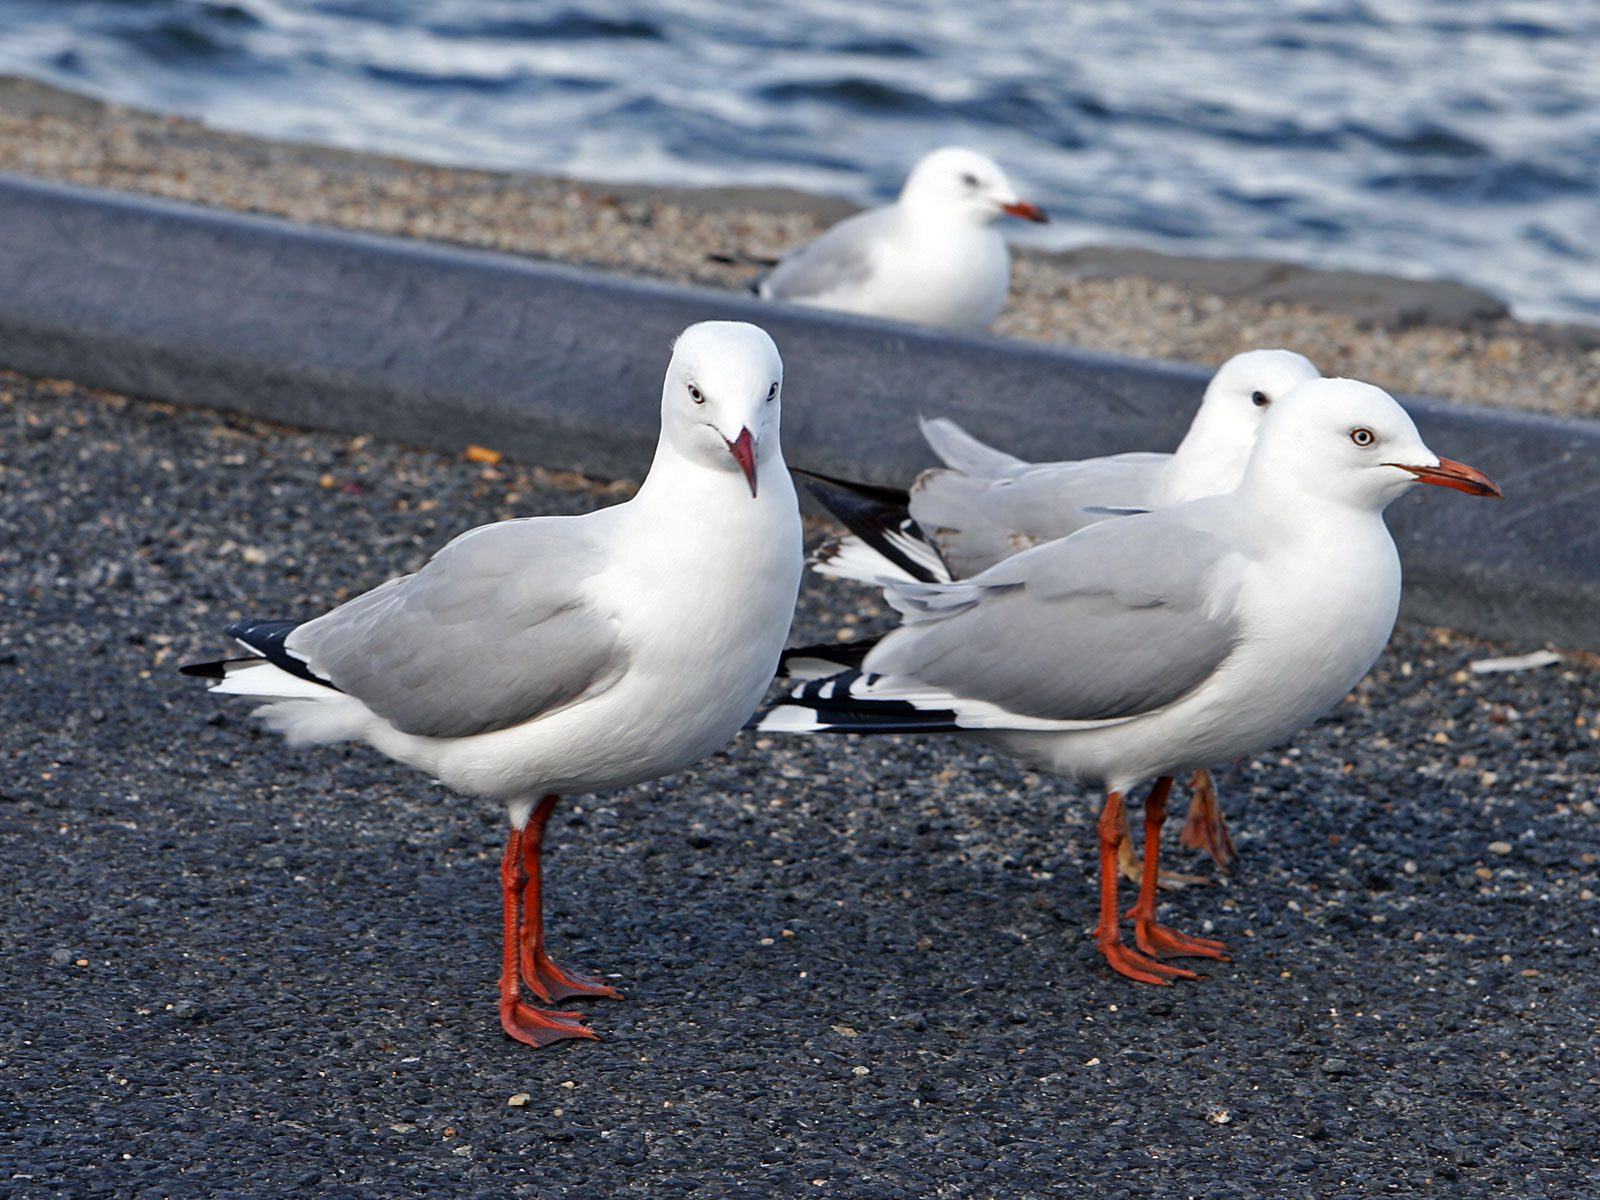 File:Red legged seagulls.jpg